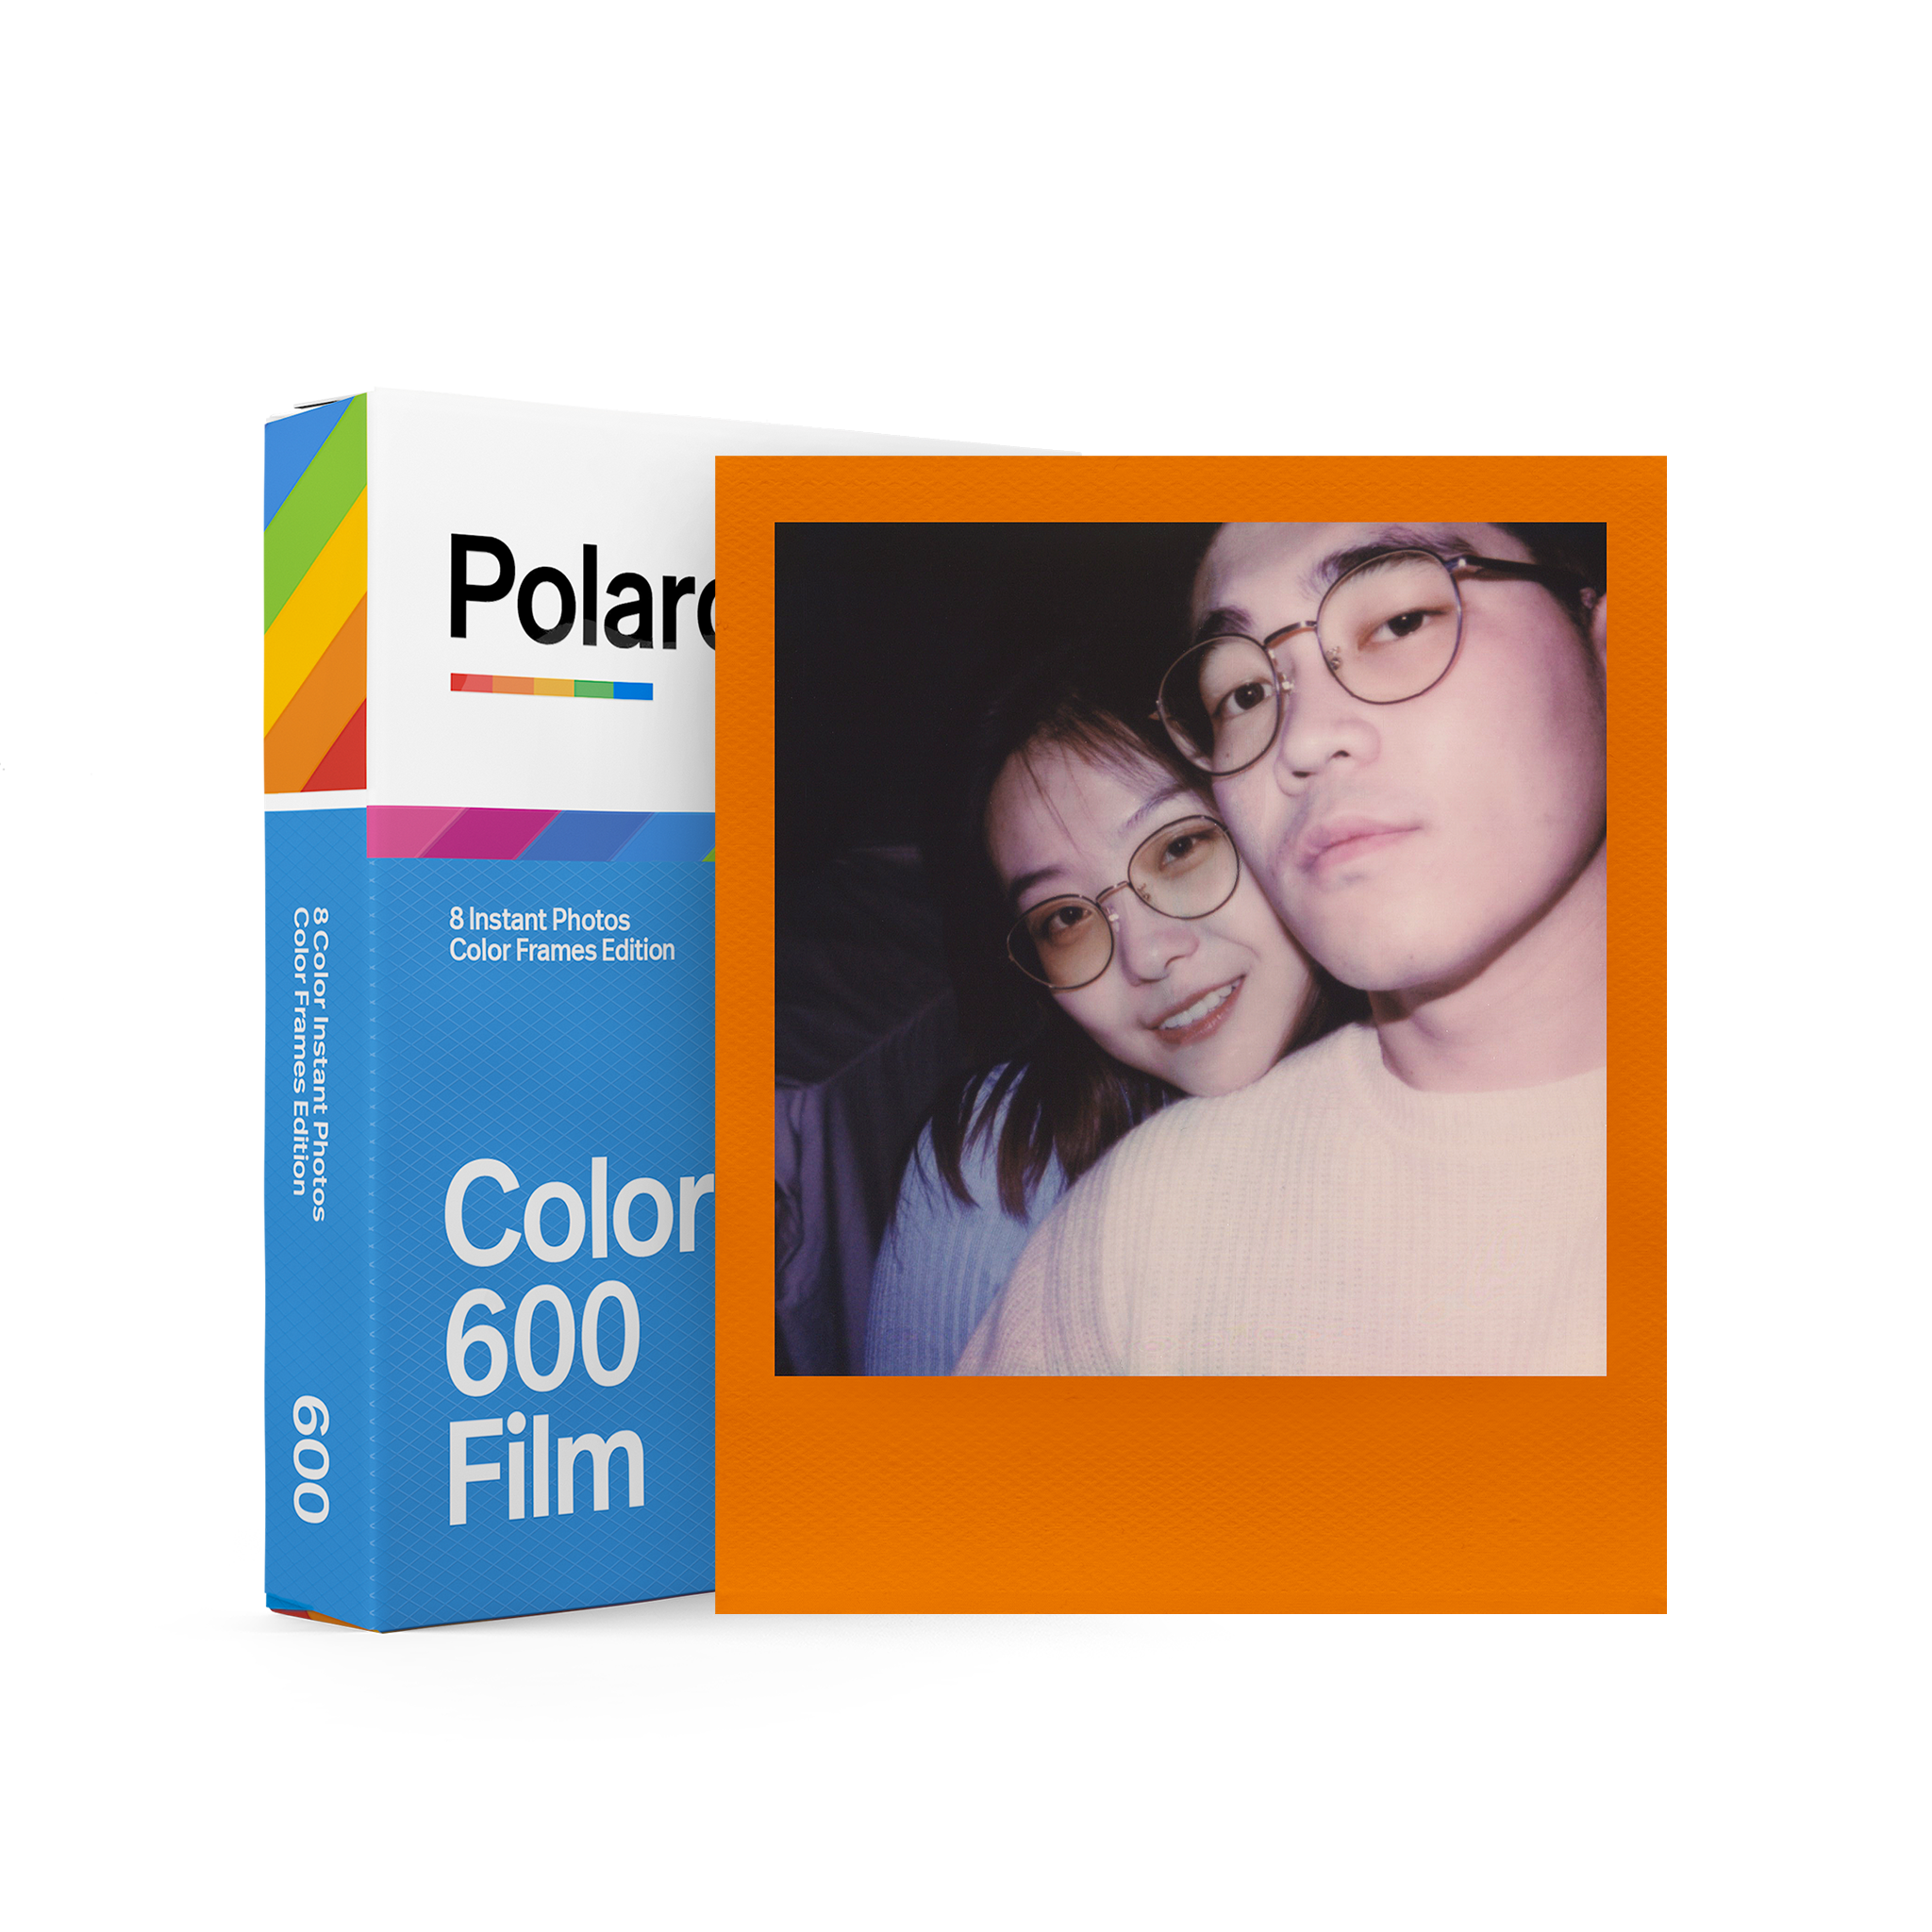 ventilator Daar Fondsen Colorful Polaroid frame - Color 600 Film